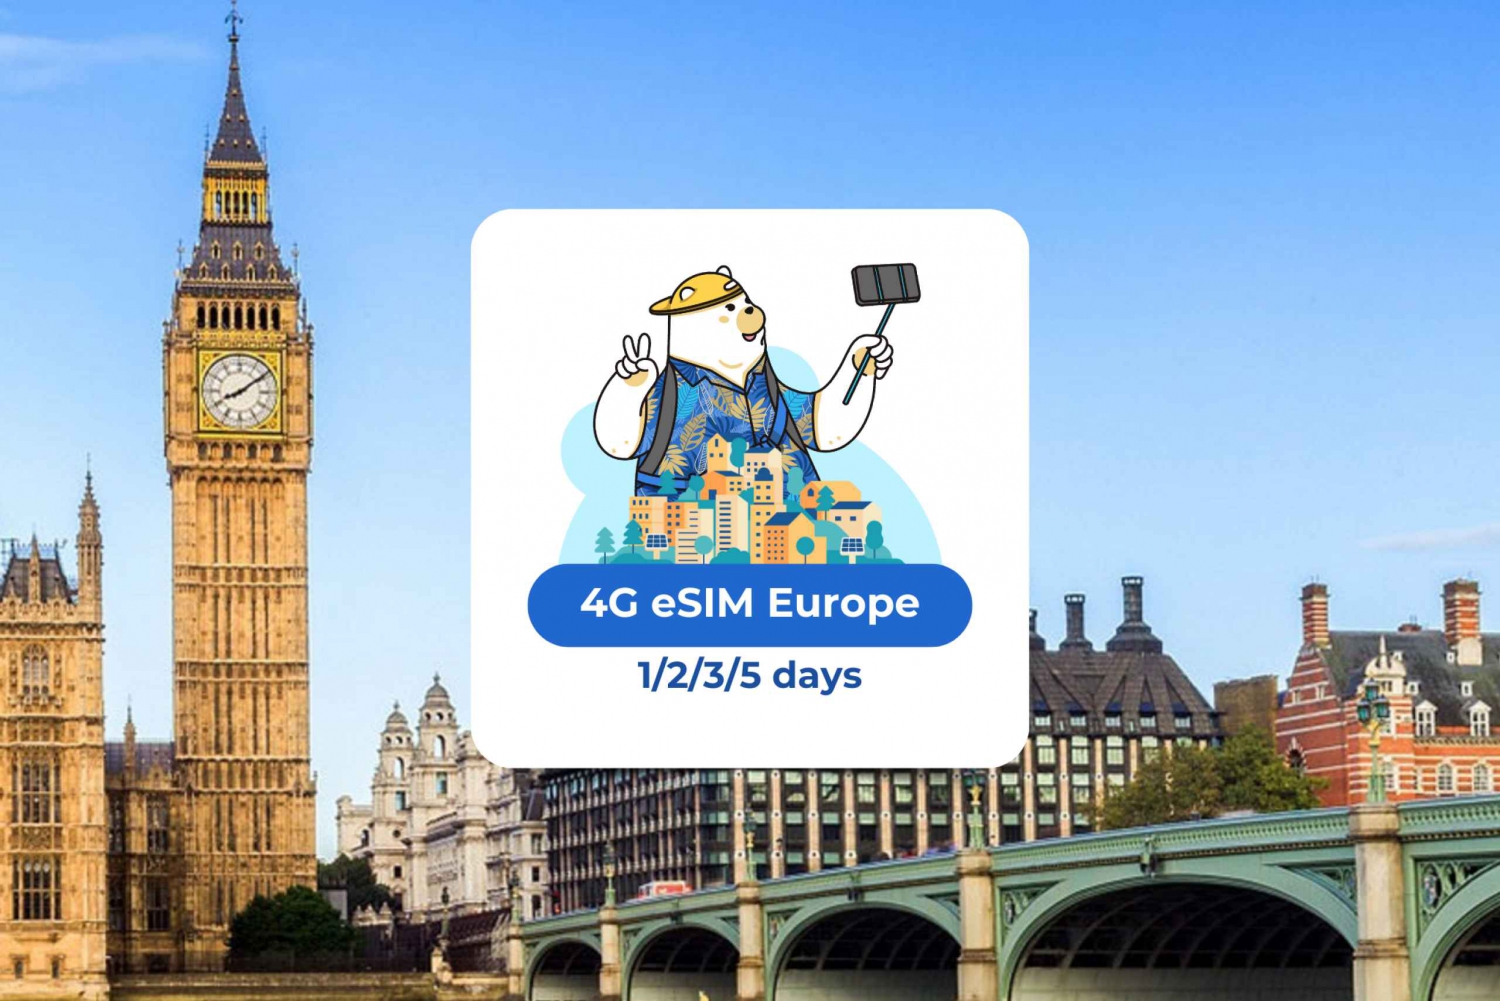 Europa: eSIM Mobile Data (33 kraje) - 1/2/3/5/7 dni